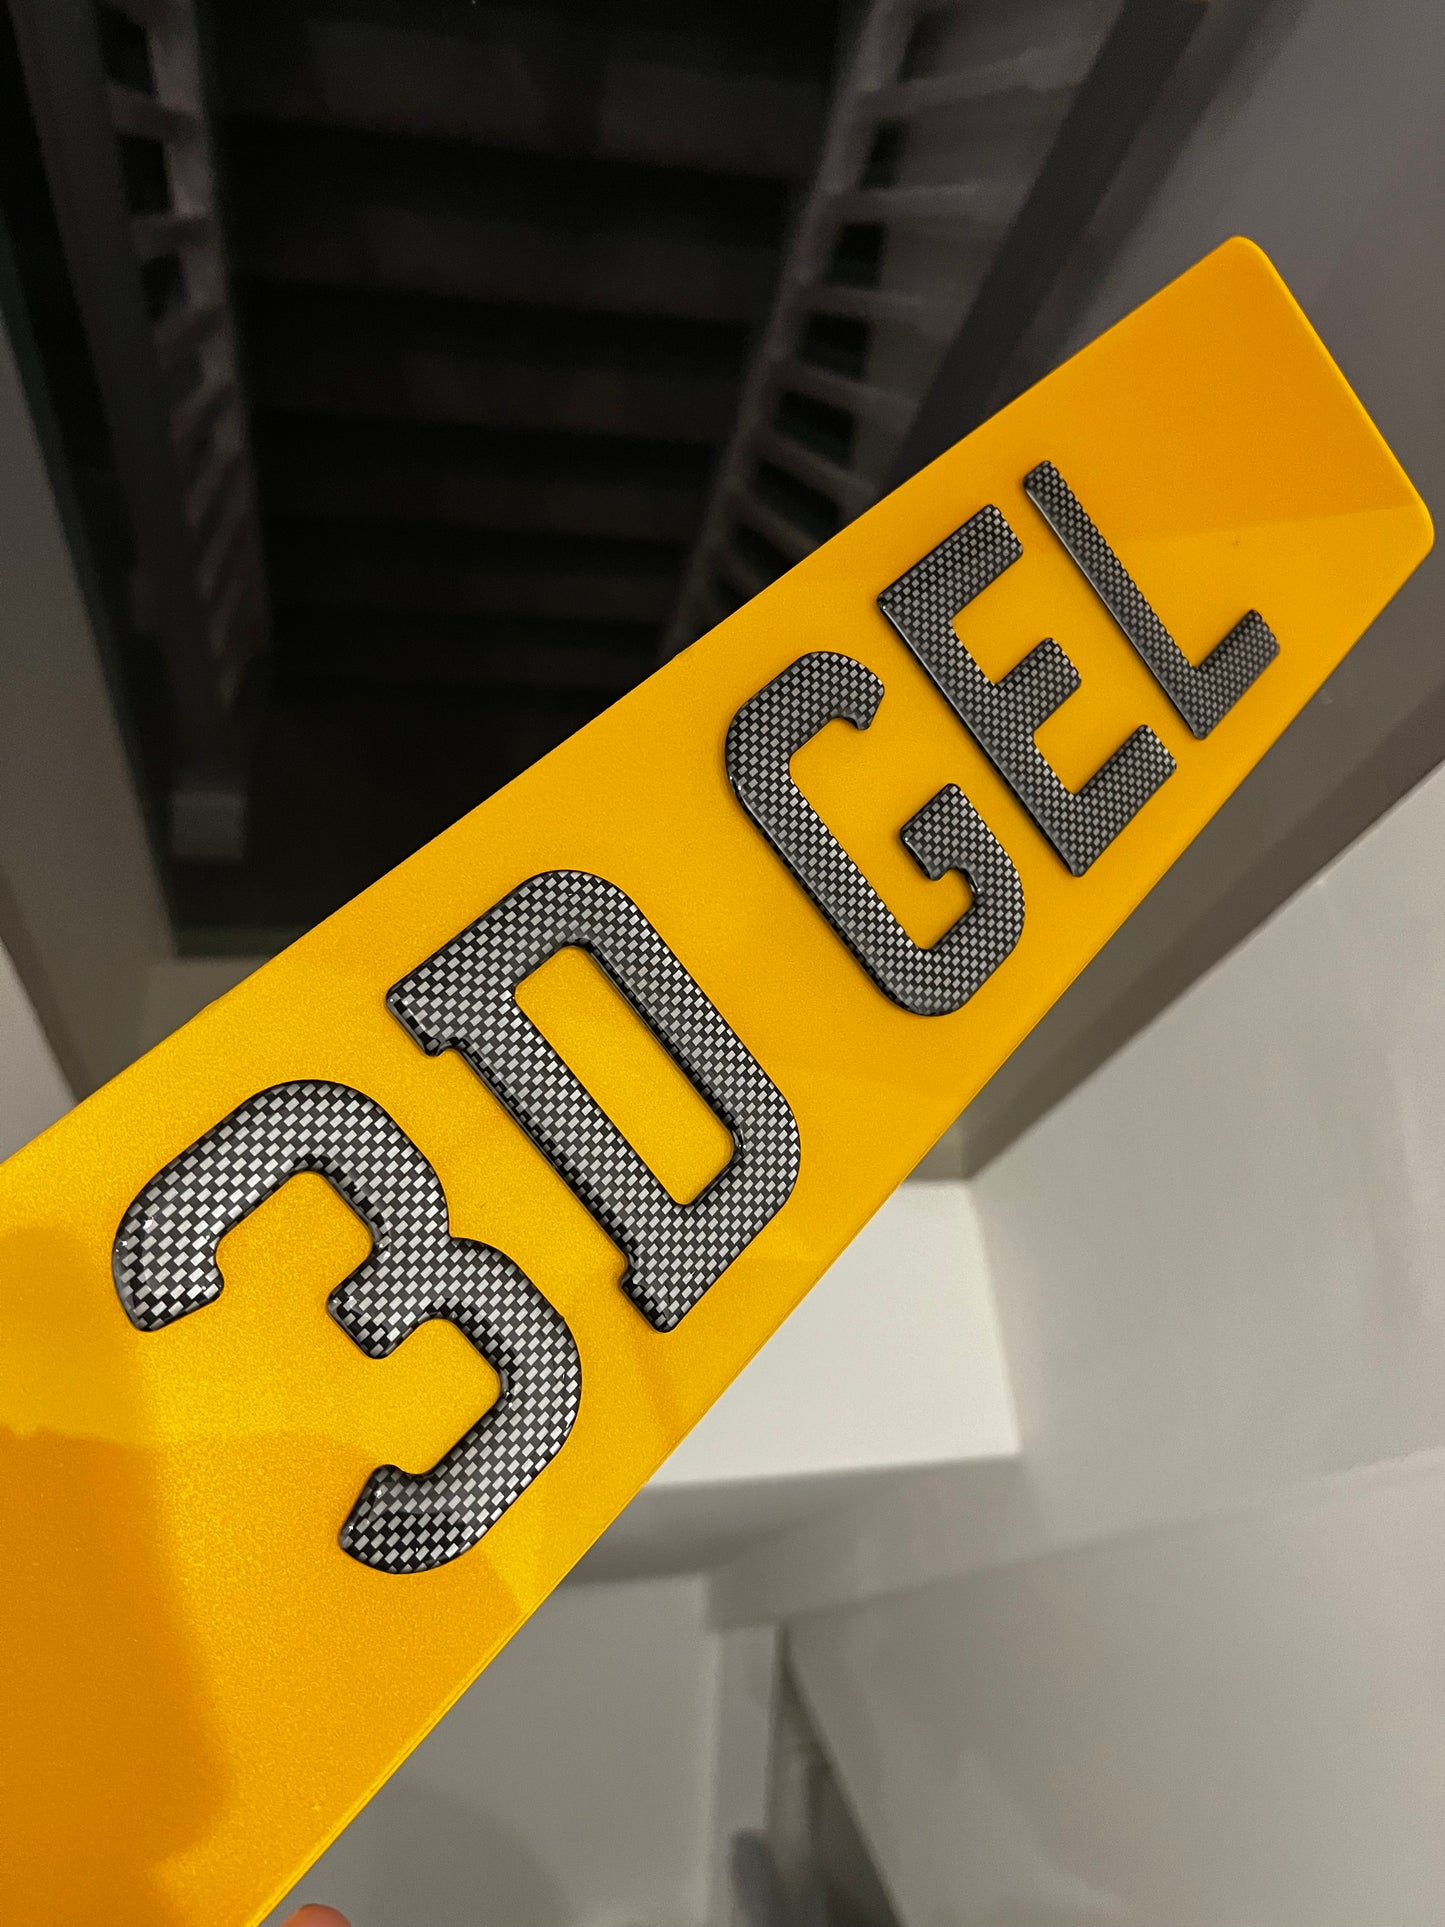 3D Carbon Gel Number Plates with Carbon Fibre Style Gel Lettering - Show Plates